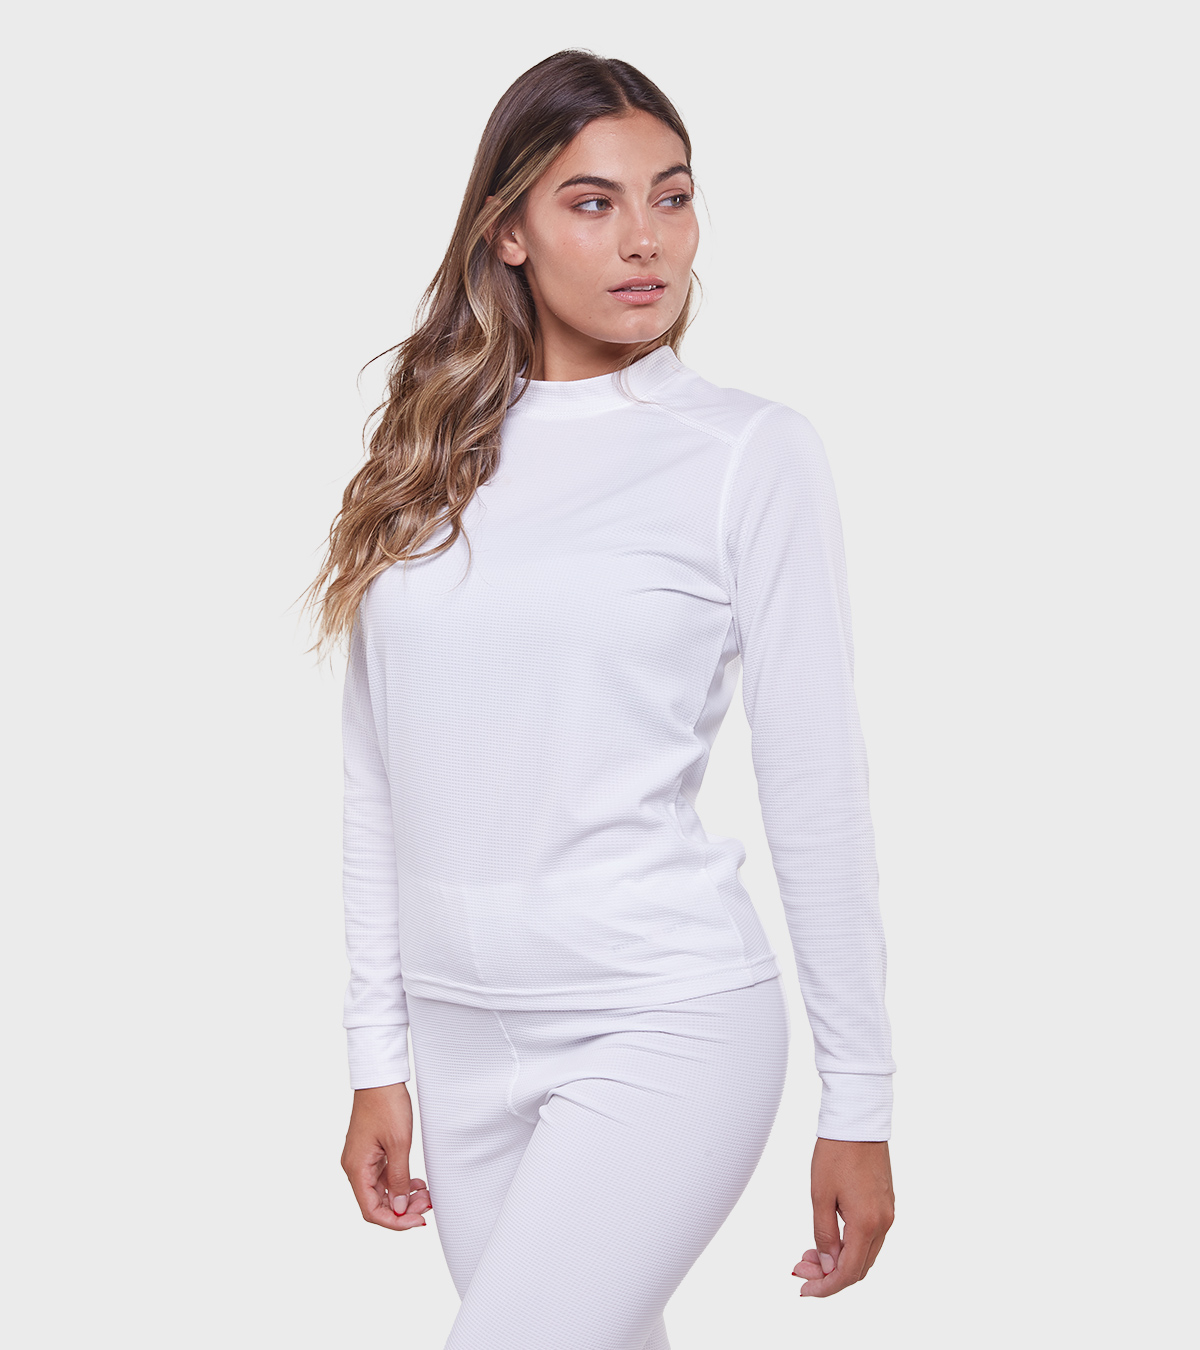 Camiseta Térmica Mujer Blanco - Comprar en Kháos